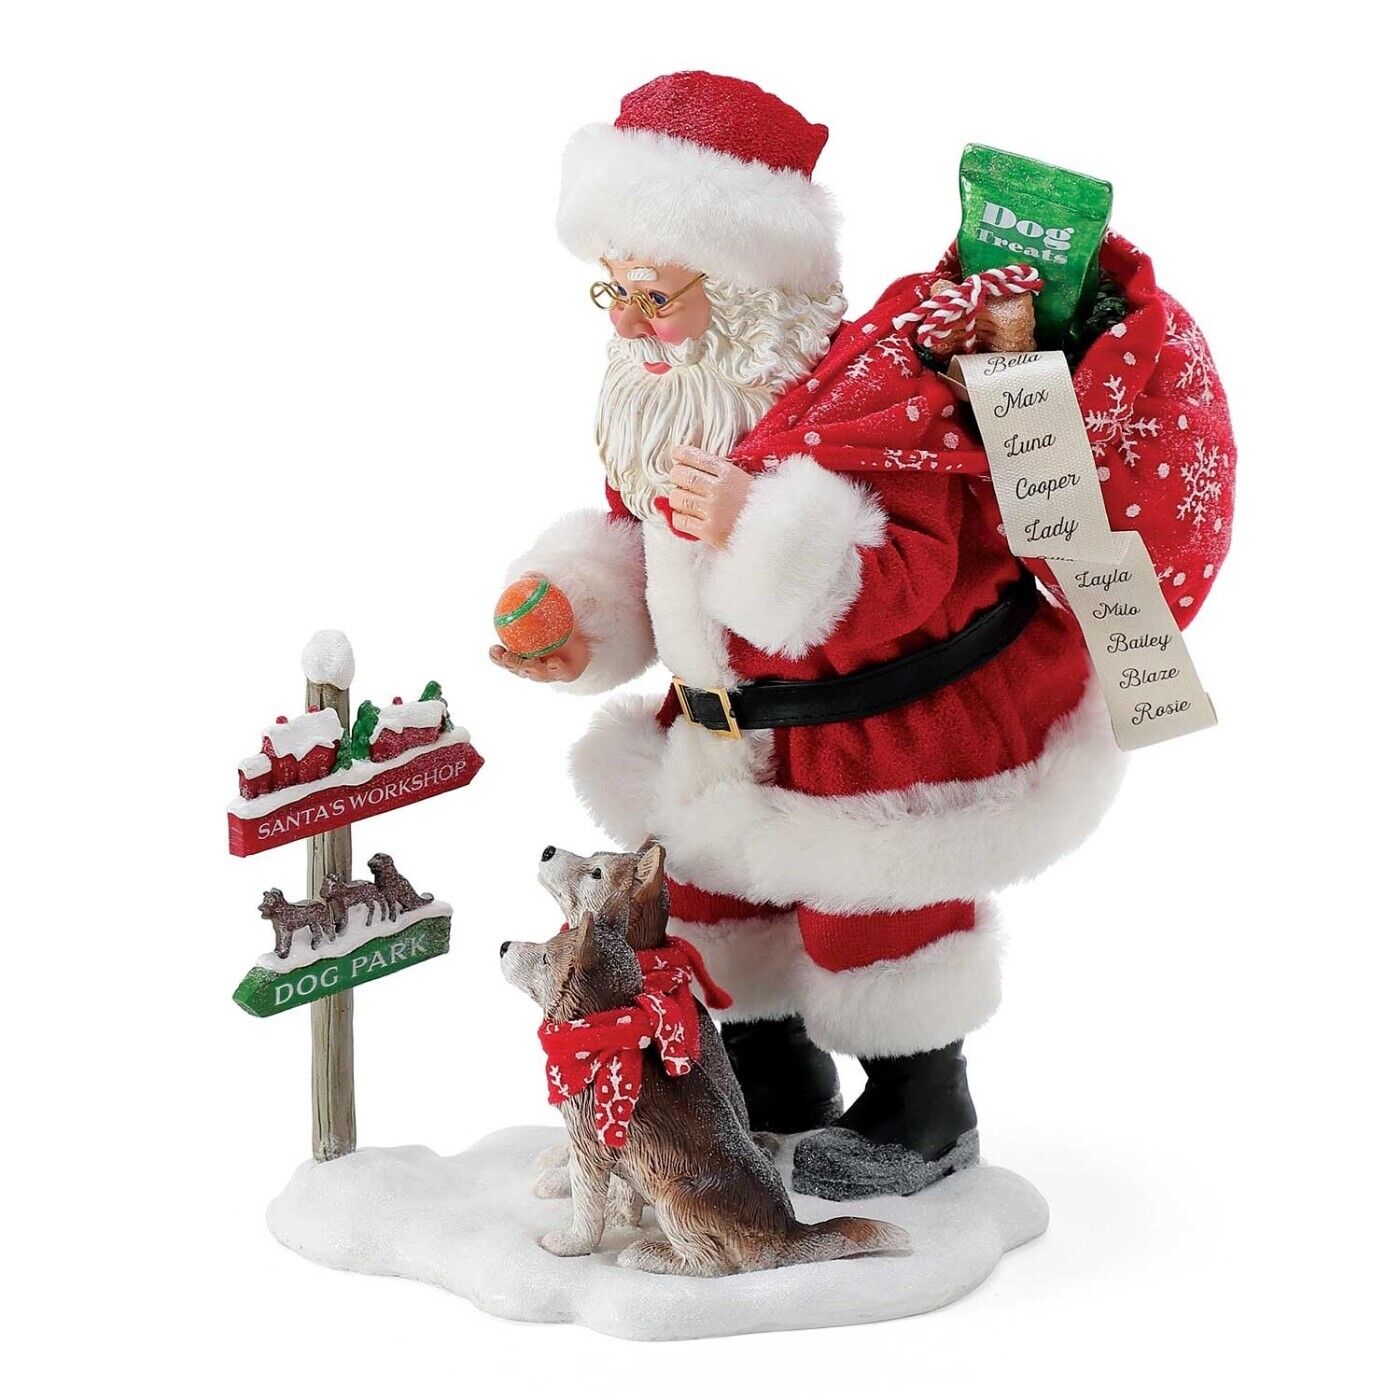 Possible Dreams Santa w/ Dogs Figurine Department 56 North Pole Dog Park 6010220